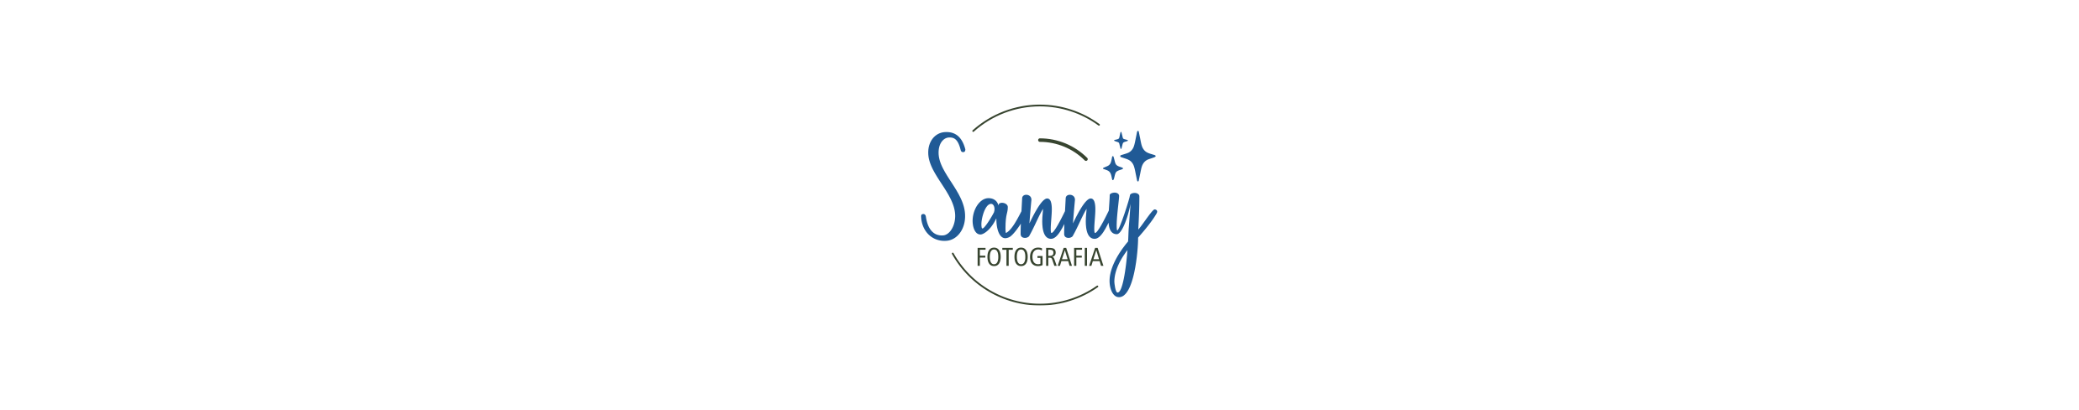 Sanny Sousas profilbanner